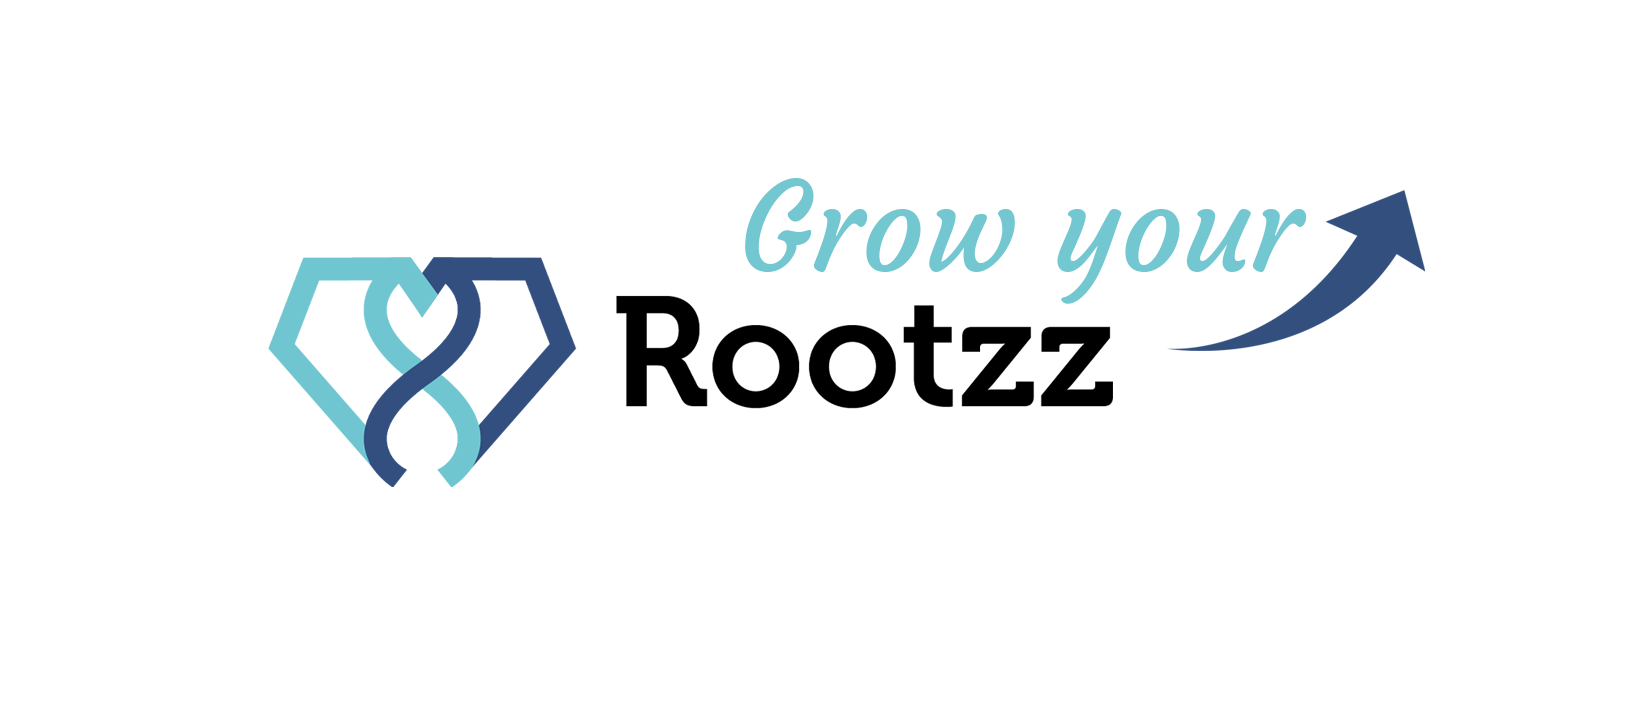 Grow your rootzz logo 